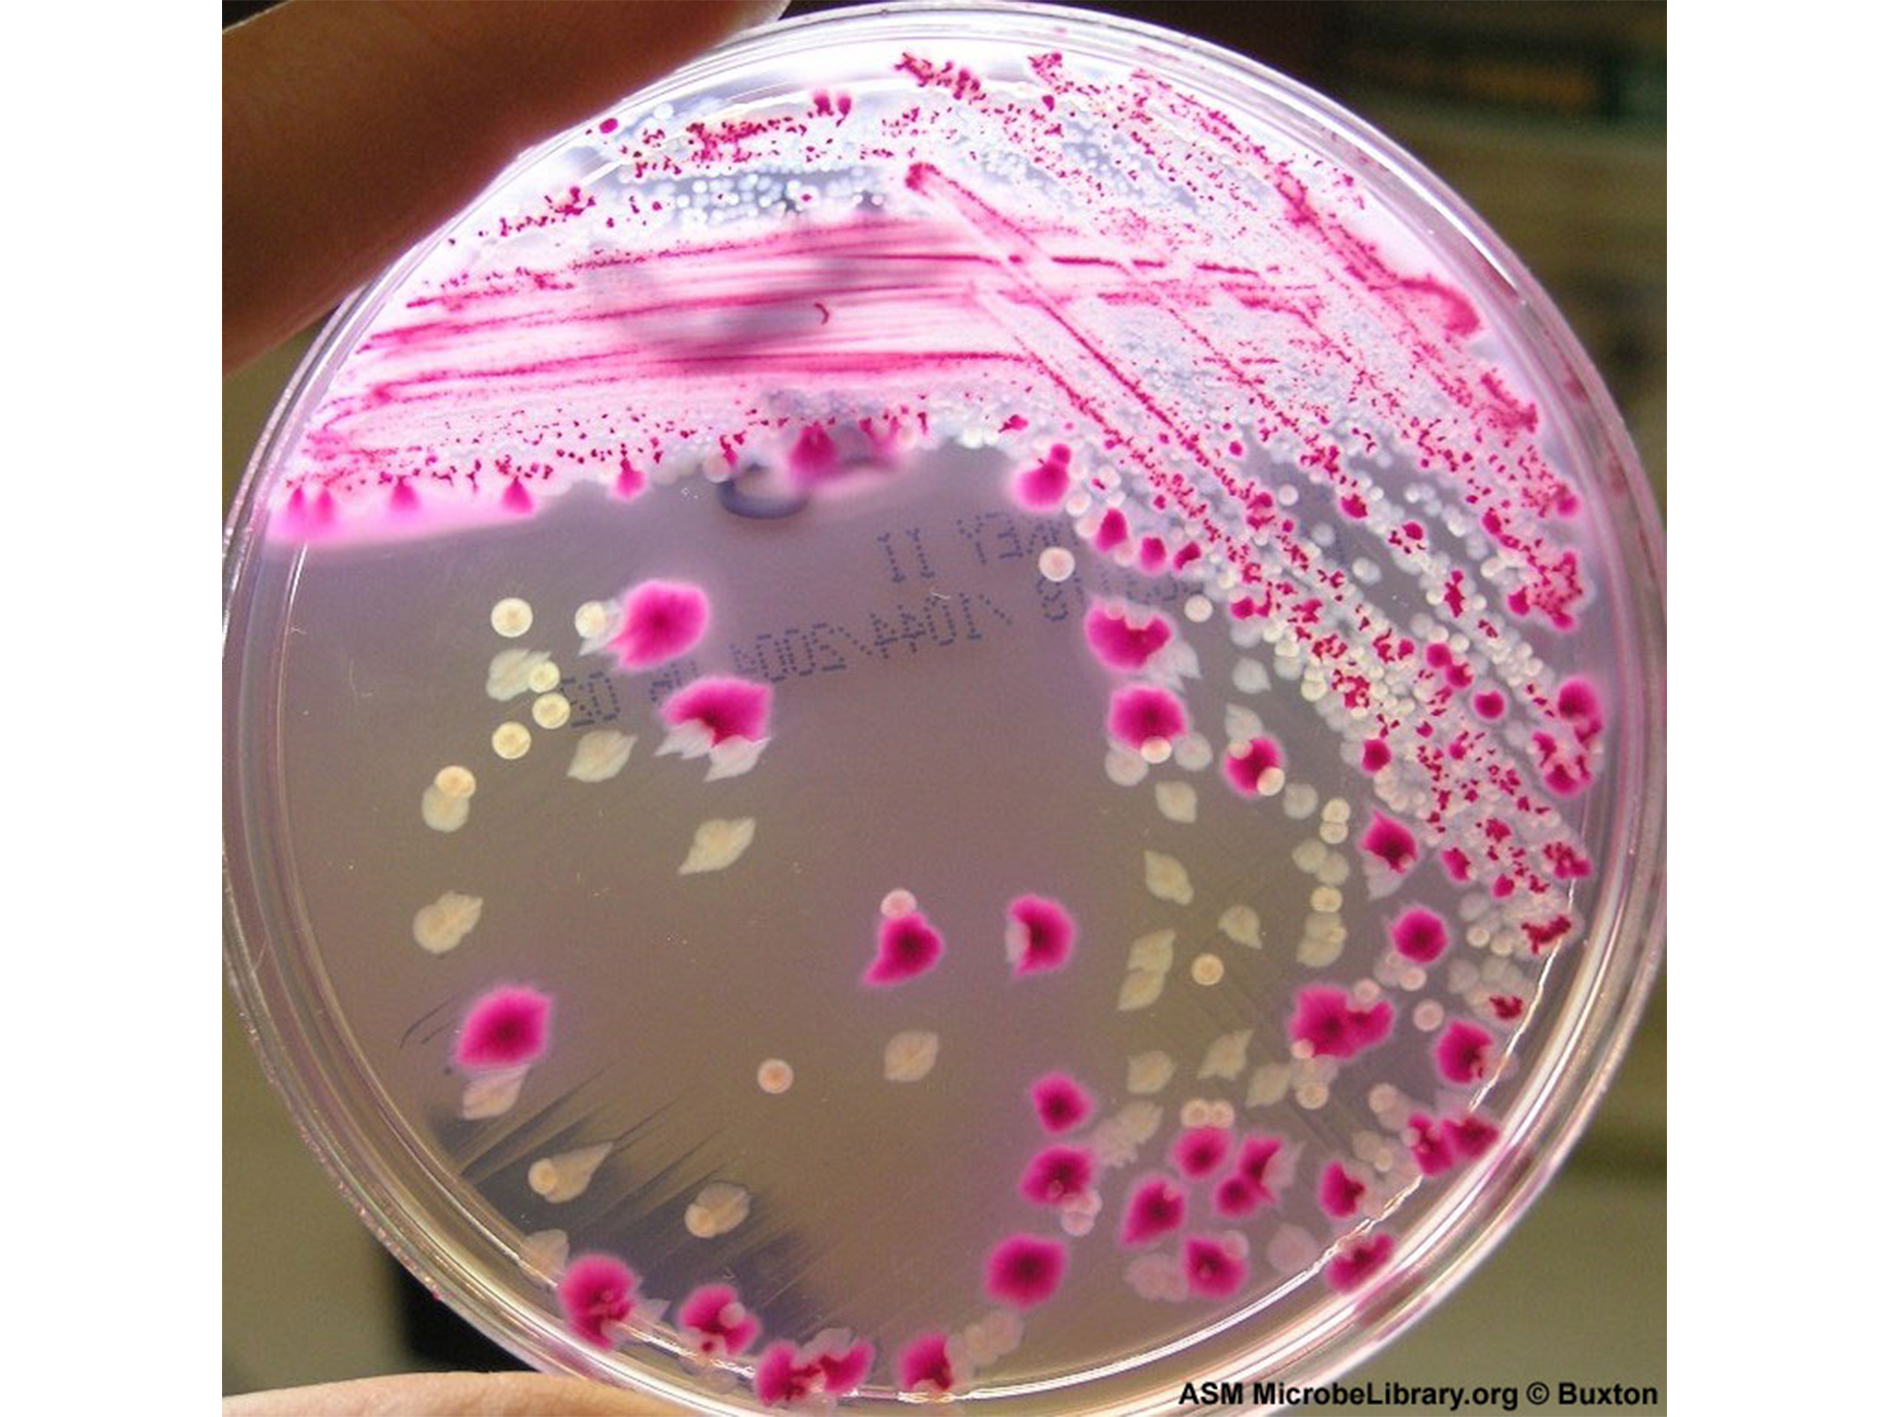 Example of monolayer cells, using e.coli in a petri dish. Photo via ASM Microbe Library